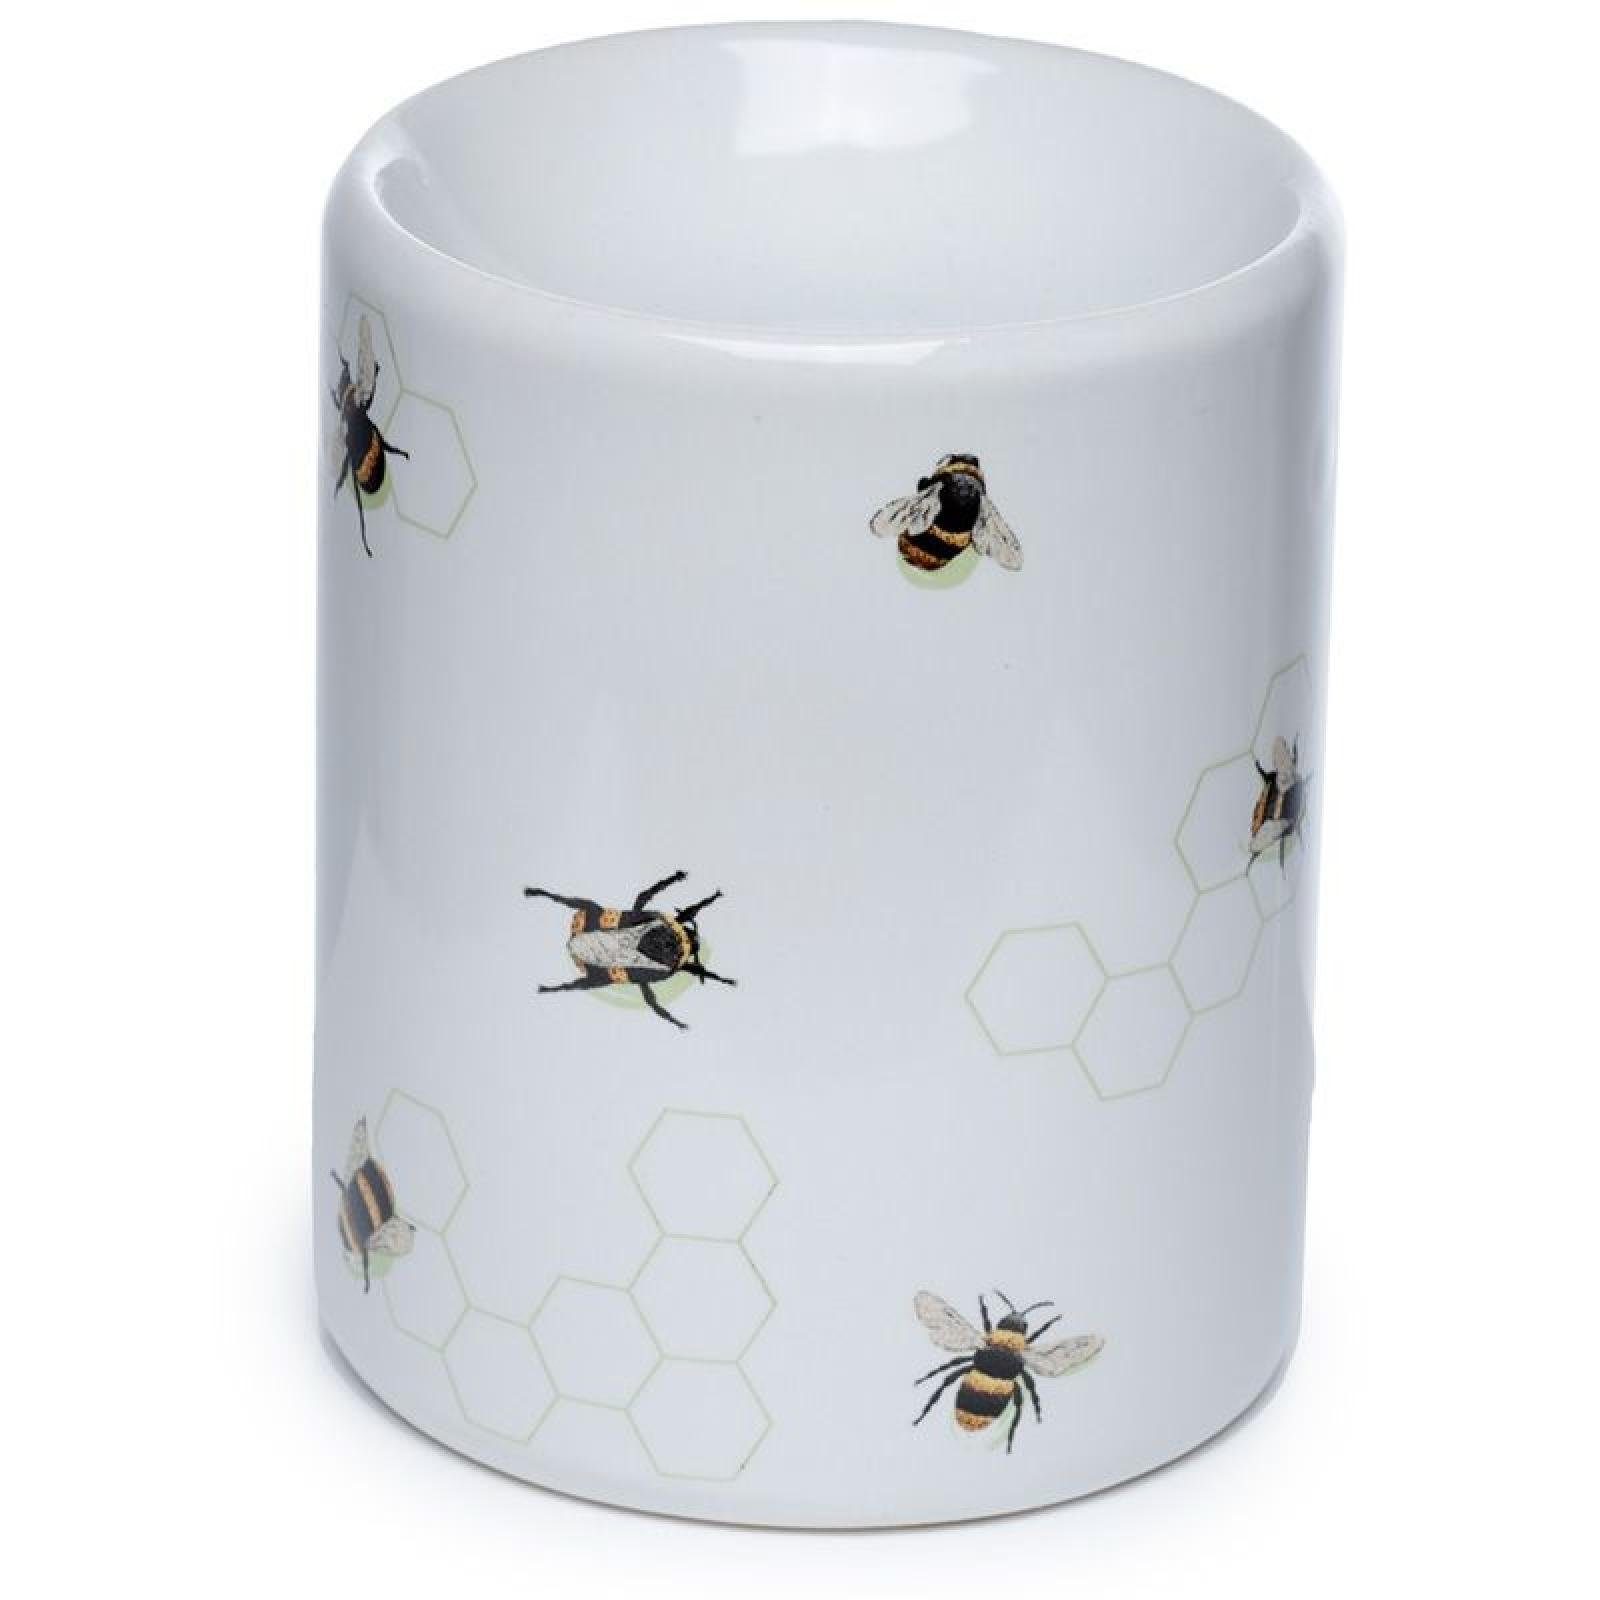 Puckator Duftlampe Nectar Meadows Bienen bedruckte Duftlampe aus Keramik